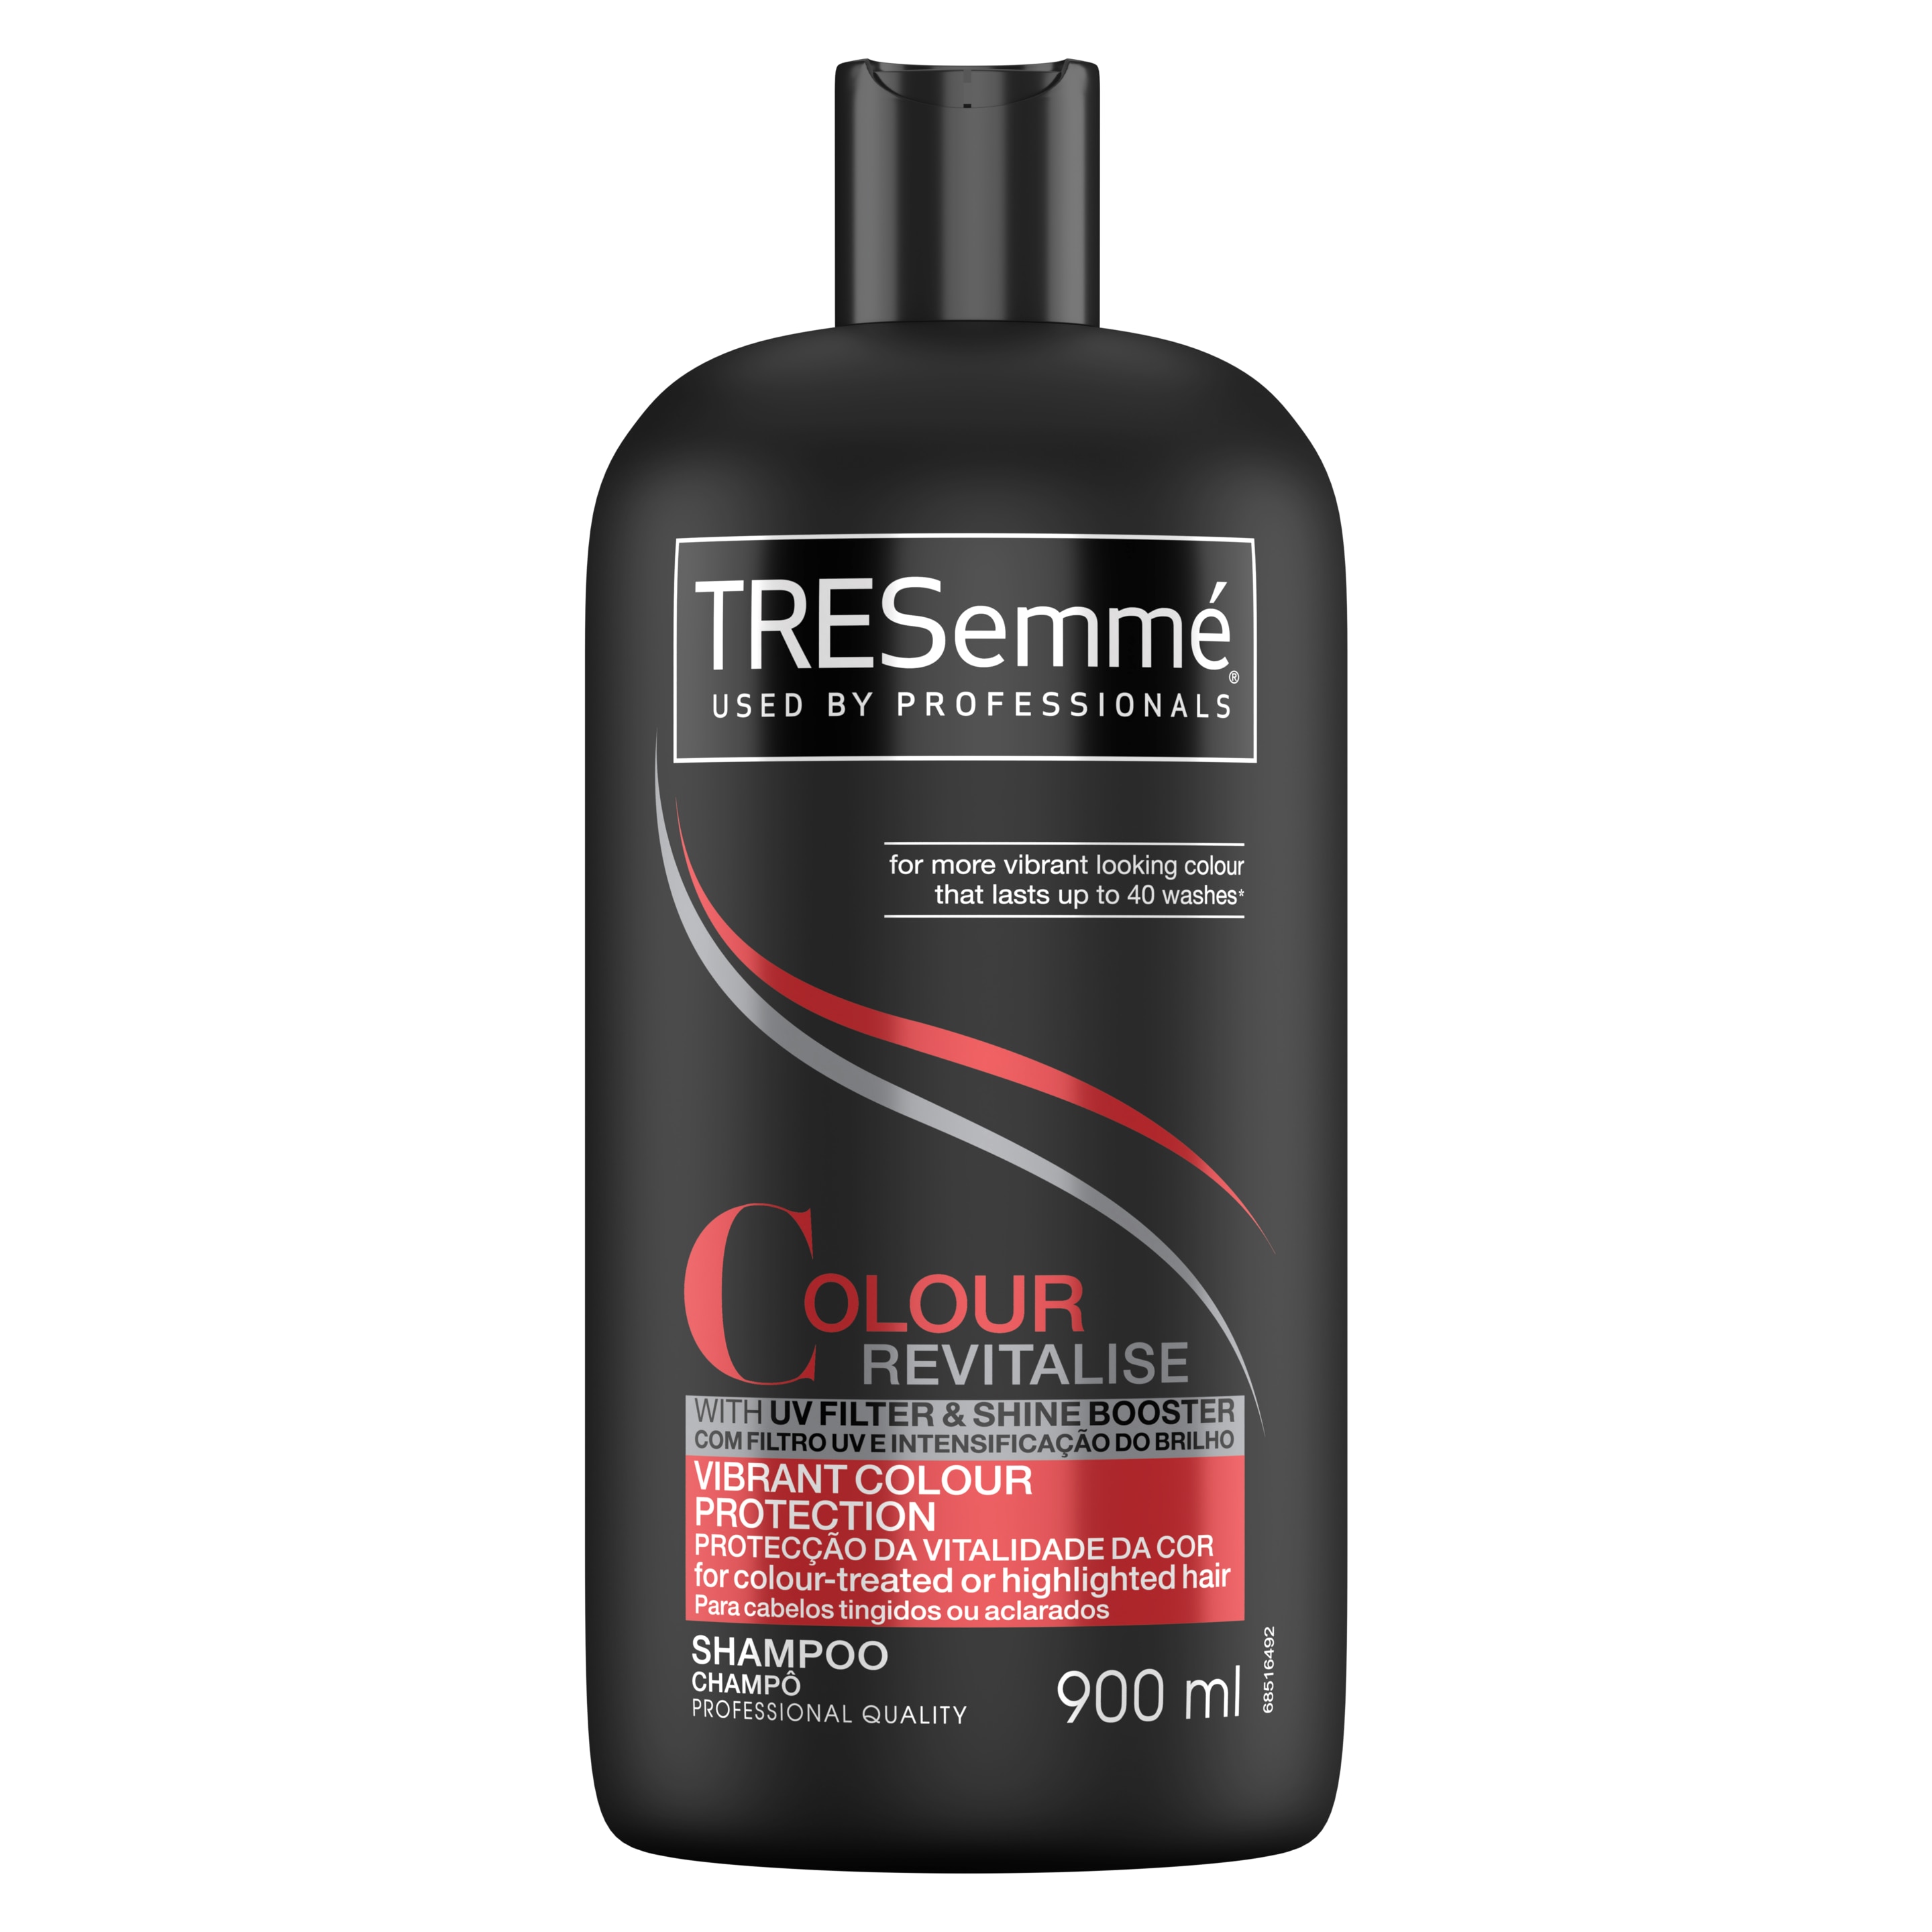 TRESemmé Colour Revitalise Shampoo 900ml Front of pack image